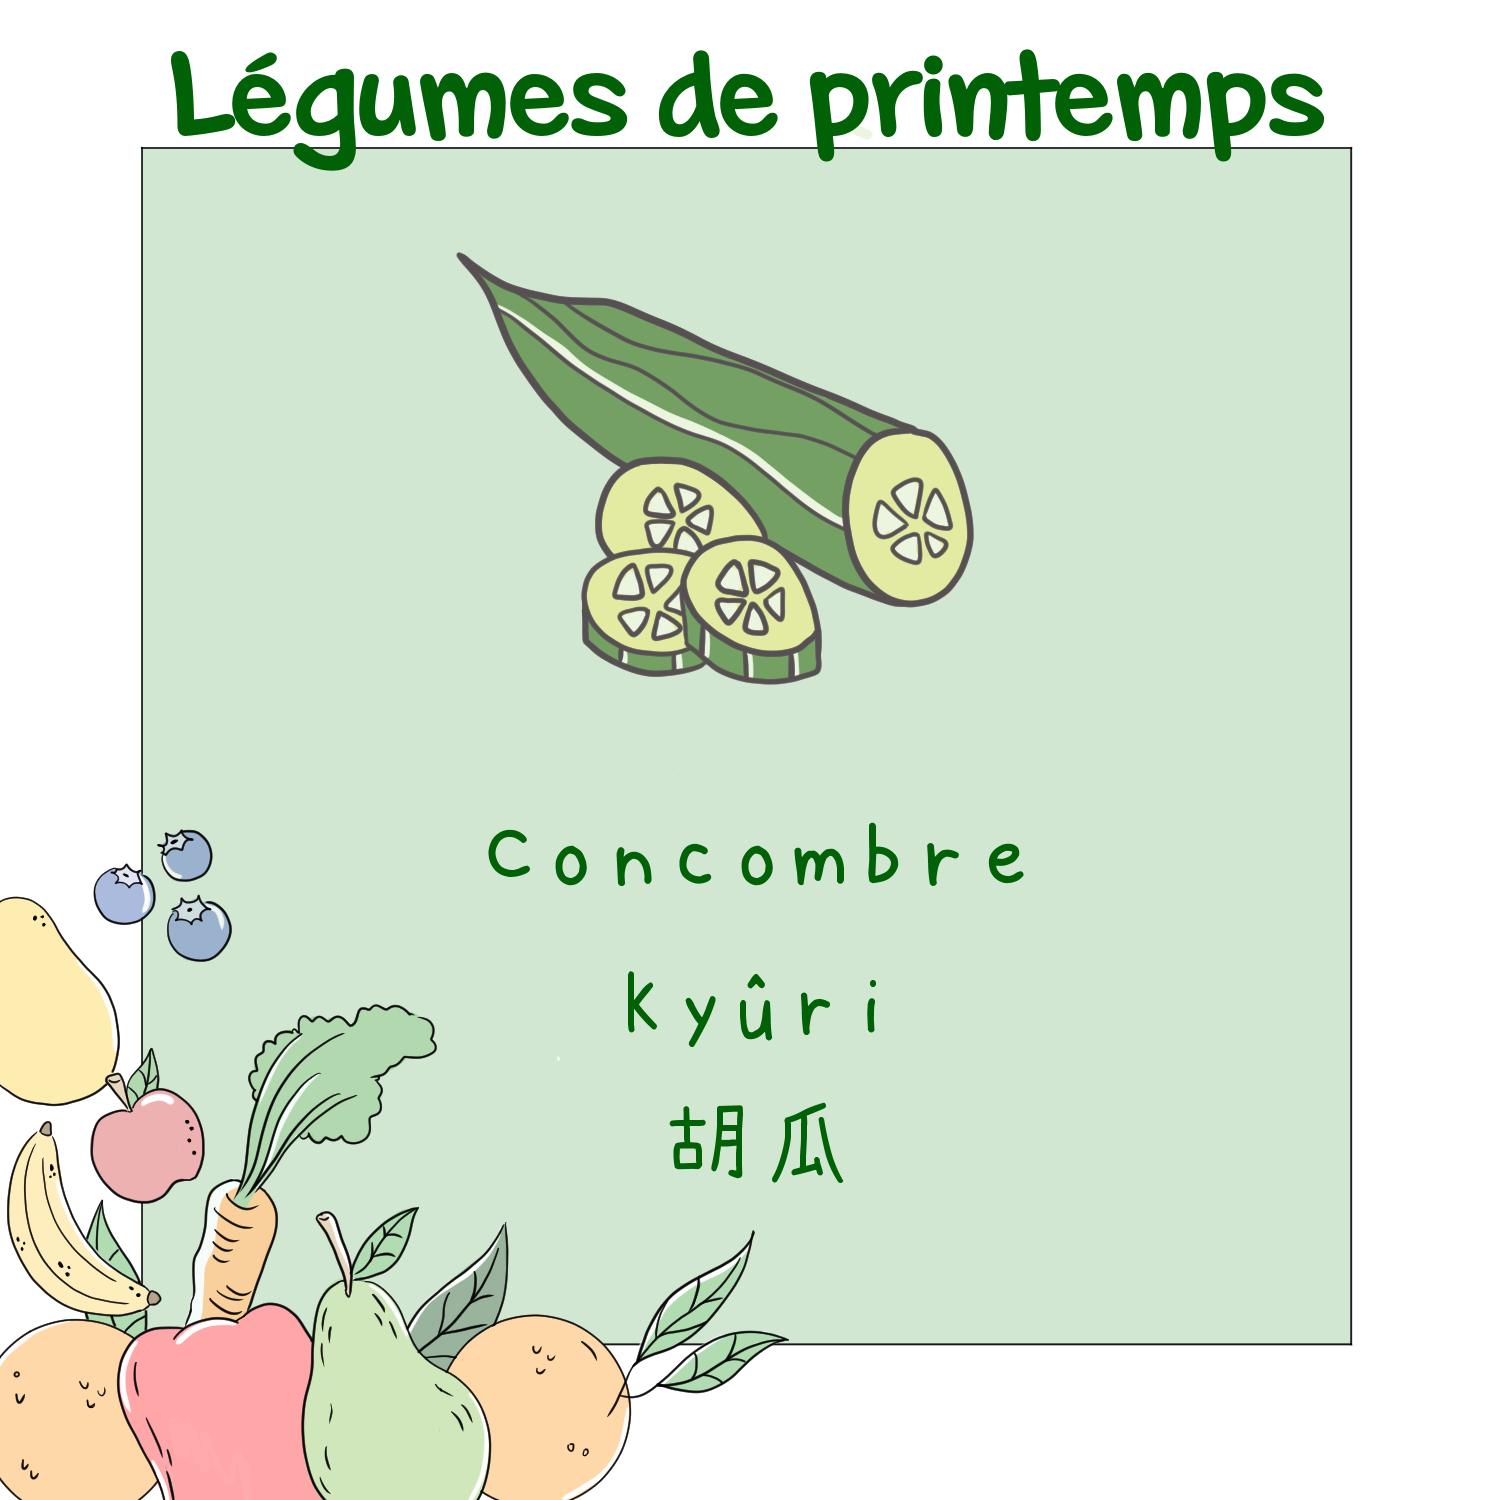 4) Concombre